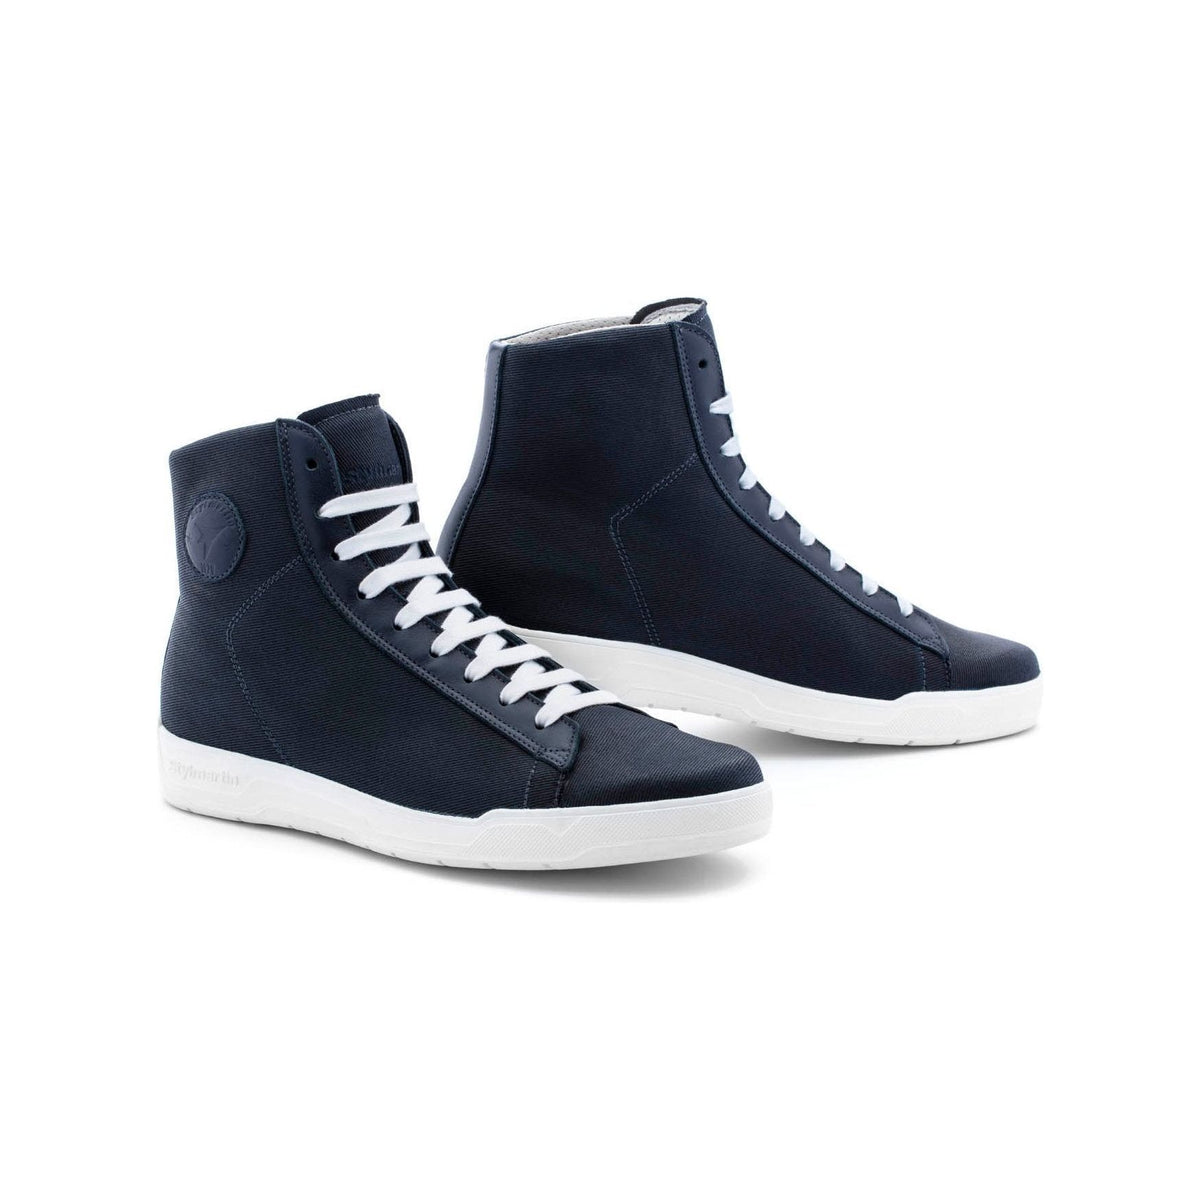 Stylmartin - Stylmartin Grid Sneaker in Blue - Boots - Salt Flats Clothing